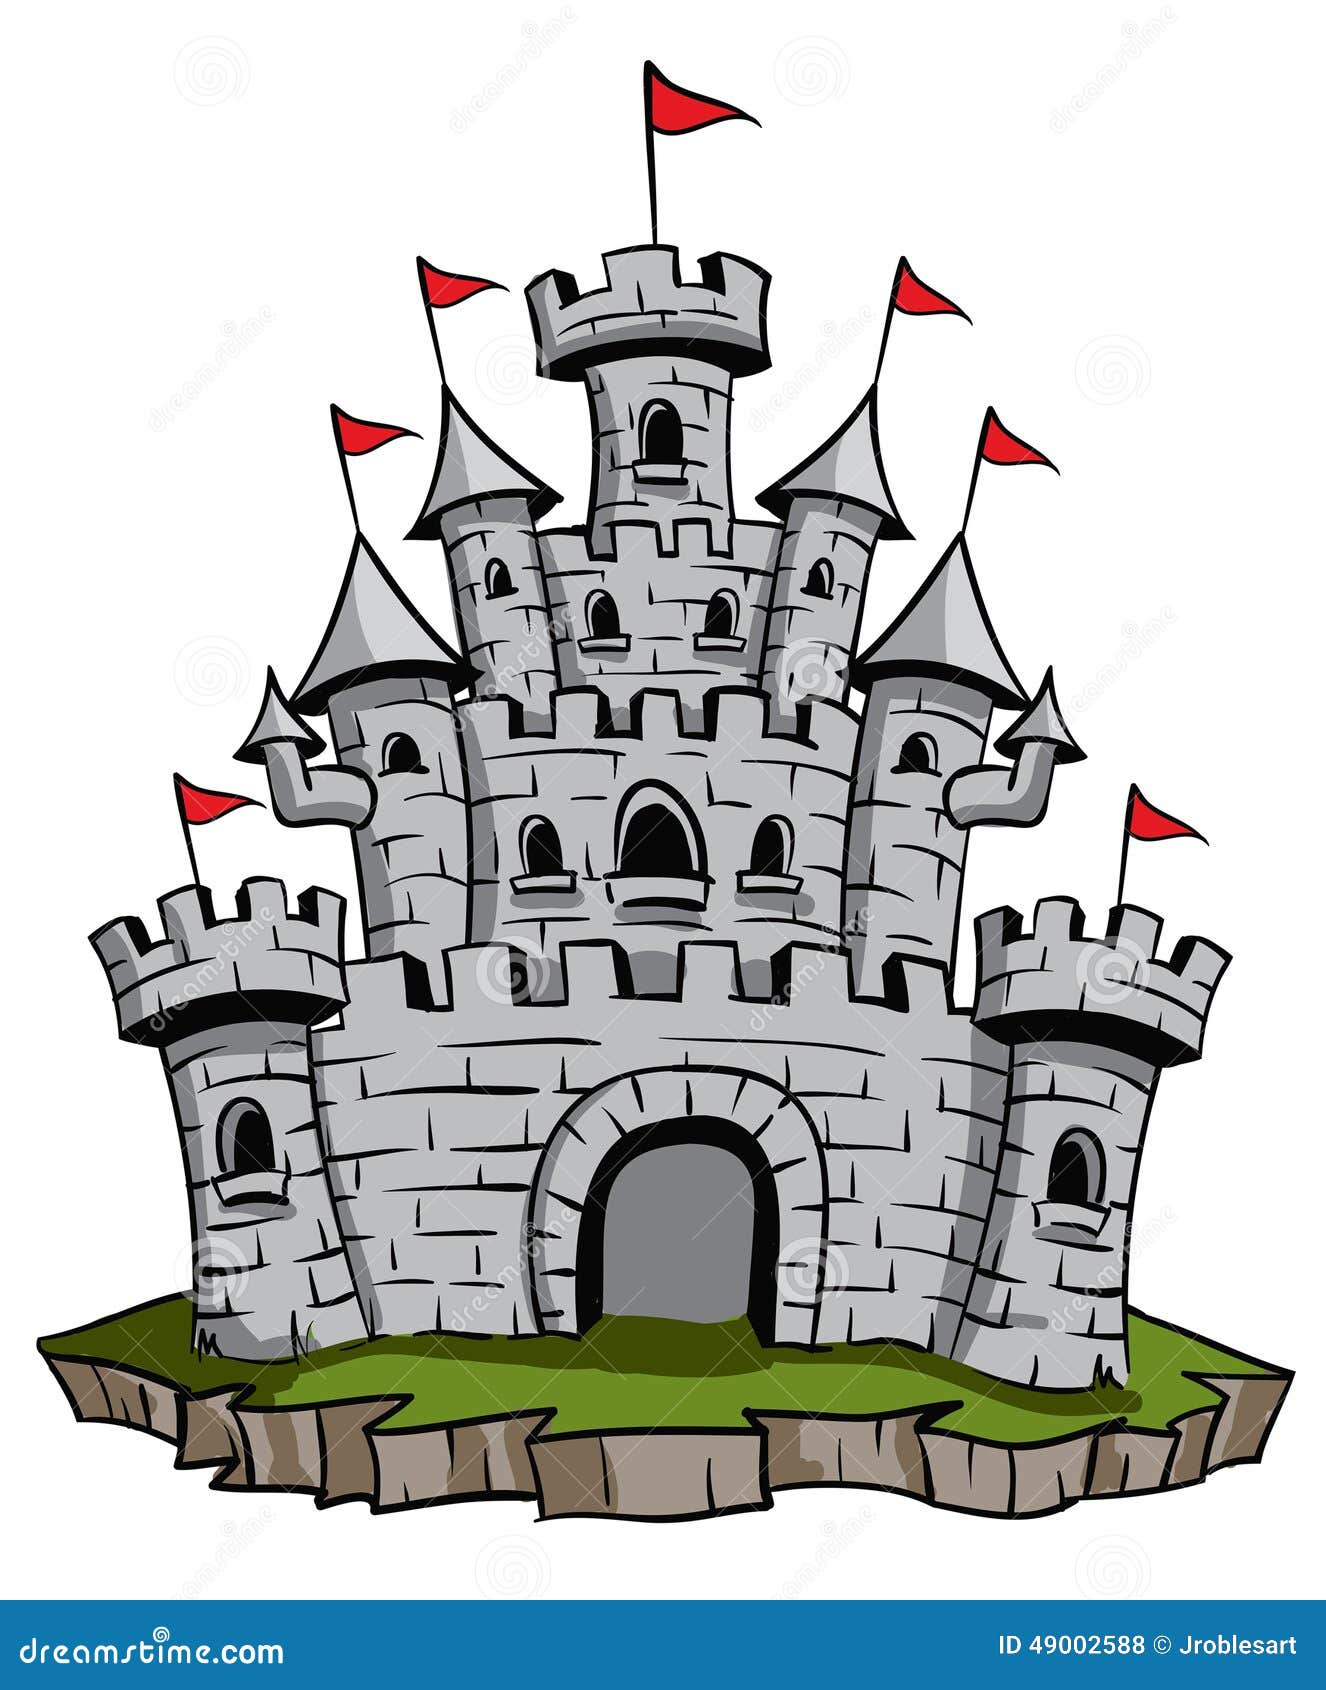 Old medieval castle illustration, ancient stone building